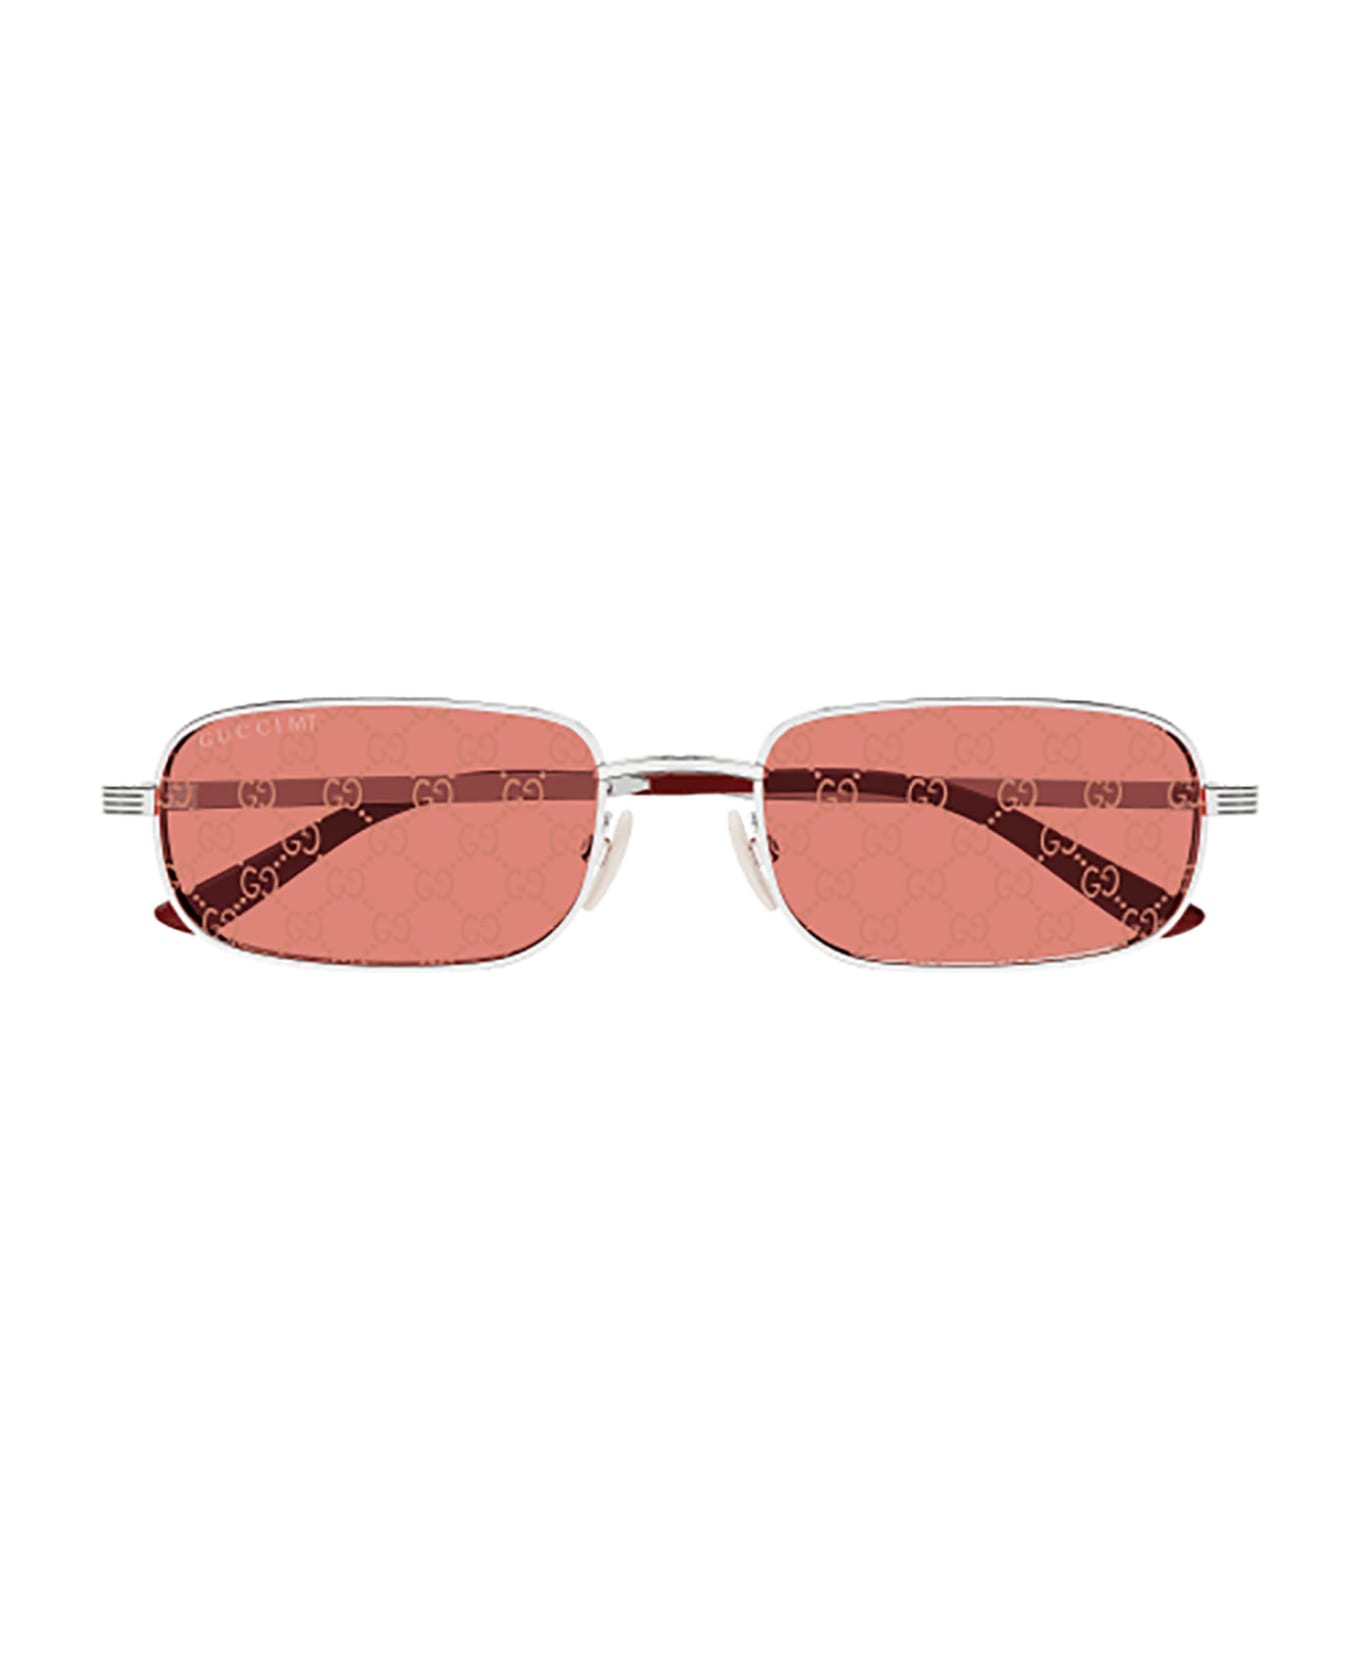 Gucci Eyewear Gg1457s Sunglasses - 004 silver silver red サングラス